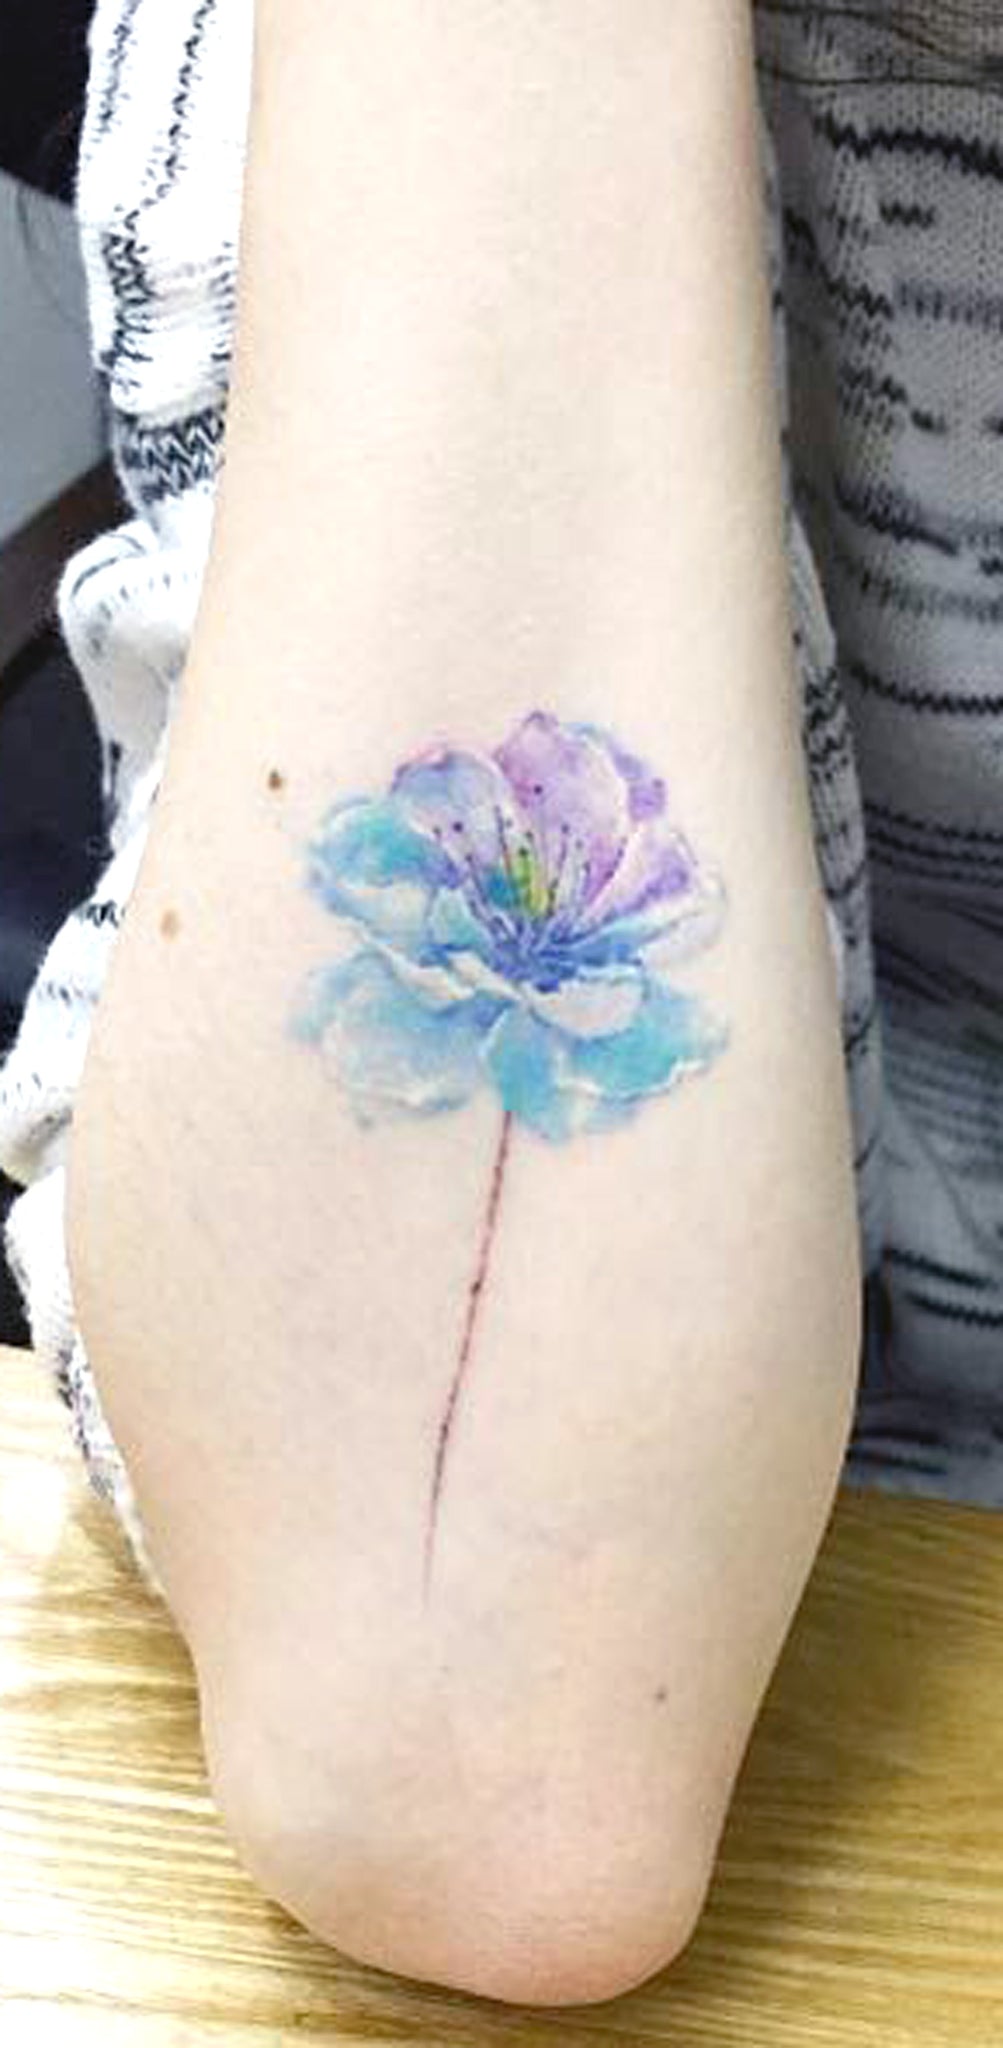 Small Blue Rose Outer Forearm Tattoo Ideas for Women - Delicate Tiny Floral Flower Watercolor Arm Tat -  pequeñas ideas del tatuaje del antebrazo color de rosa de la acuarela para las mujeres - www.MyBodiArt.com